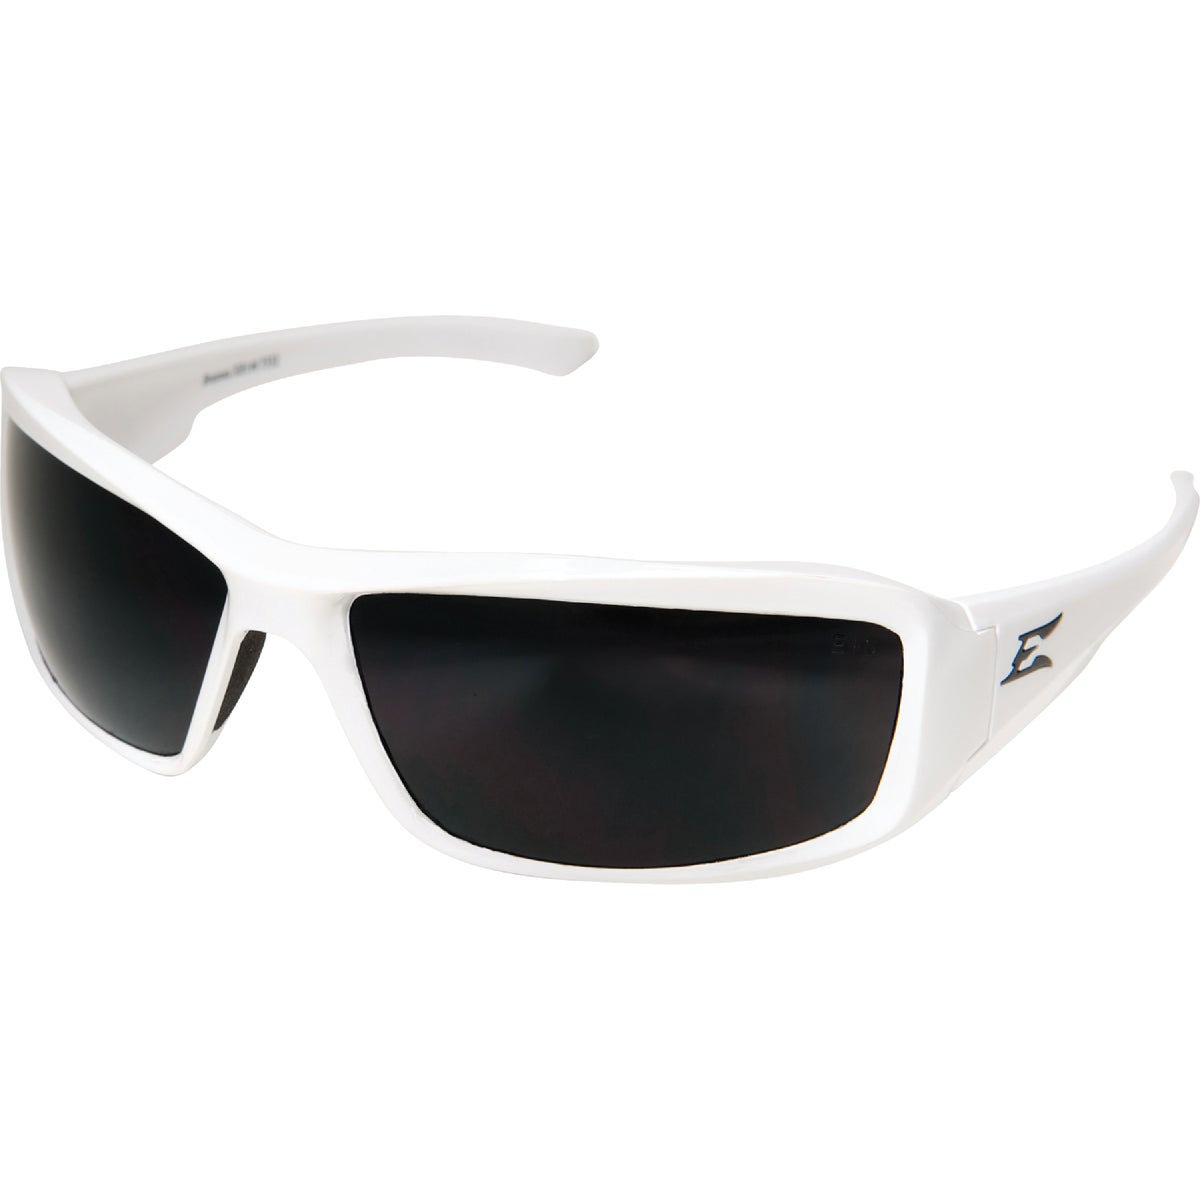 Edge Eyewear Brazeau Gloss White Frame Safety Glasses with Smoke Lenses